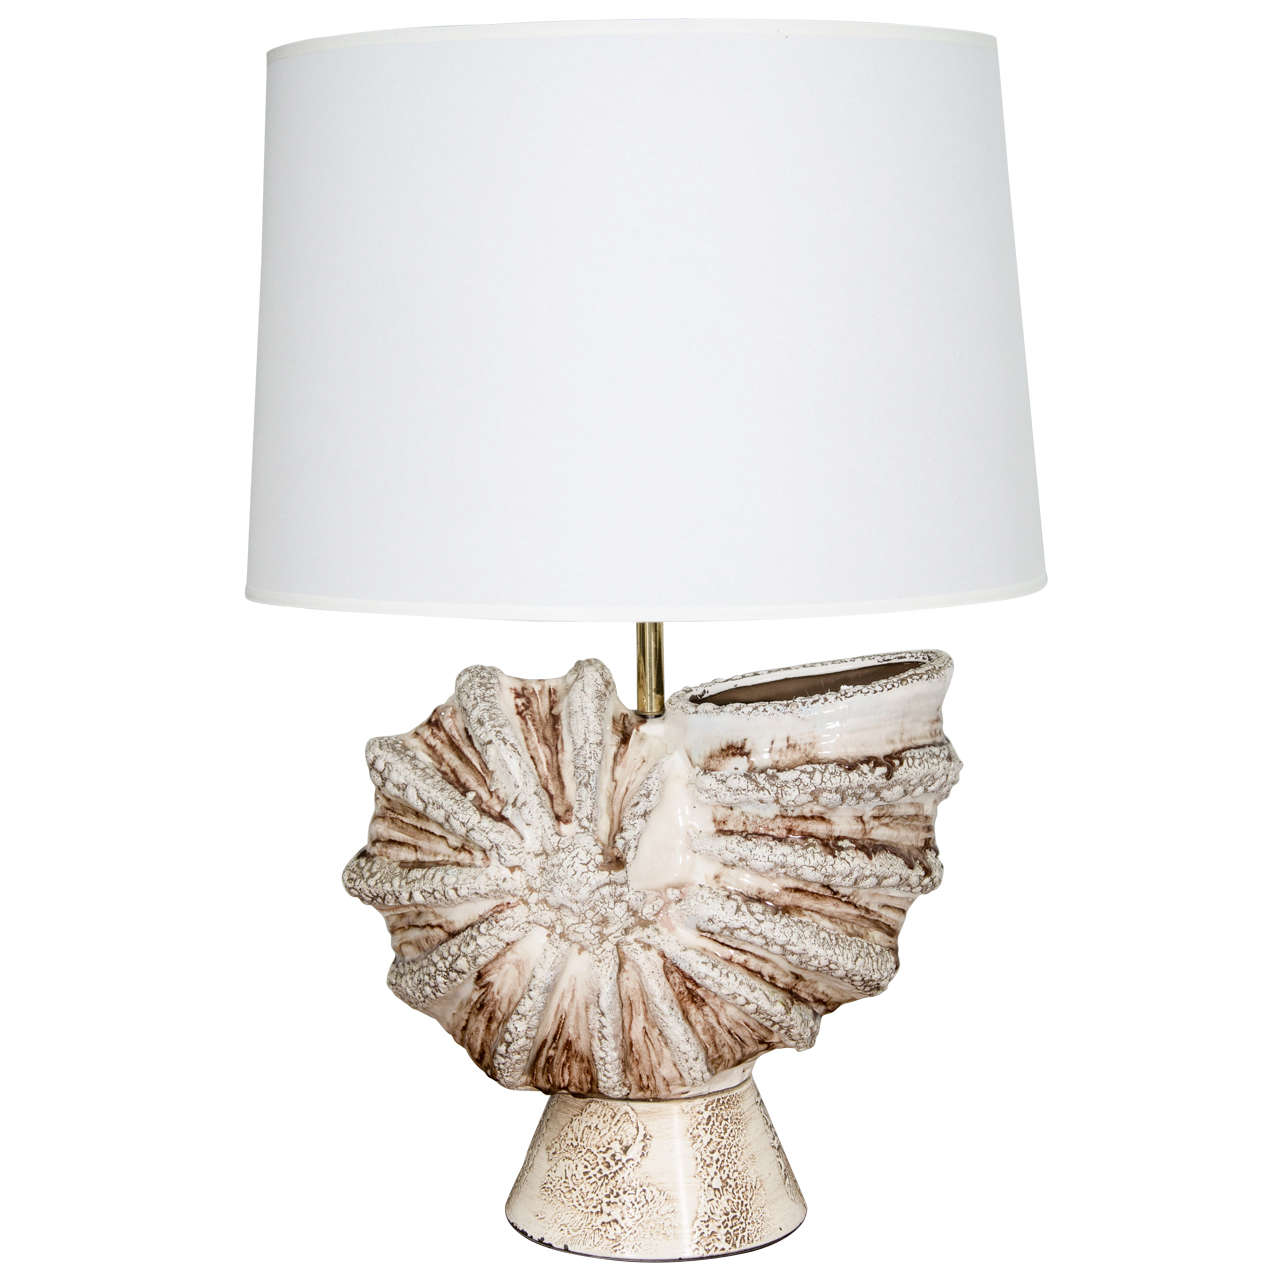 Ceramic Shell Table Lamp